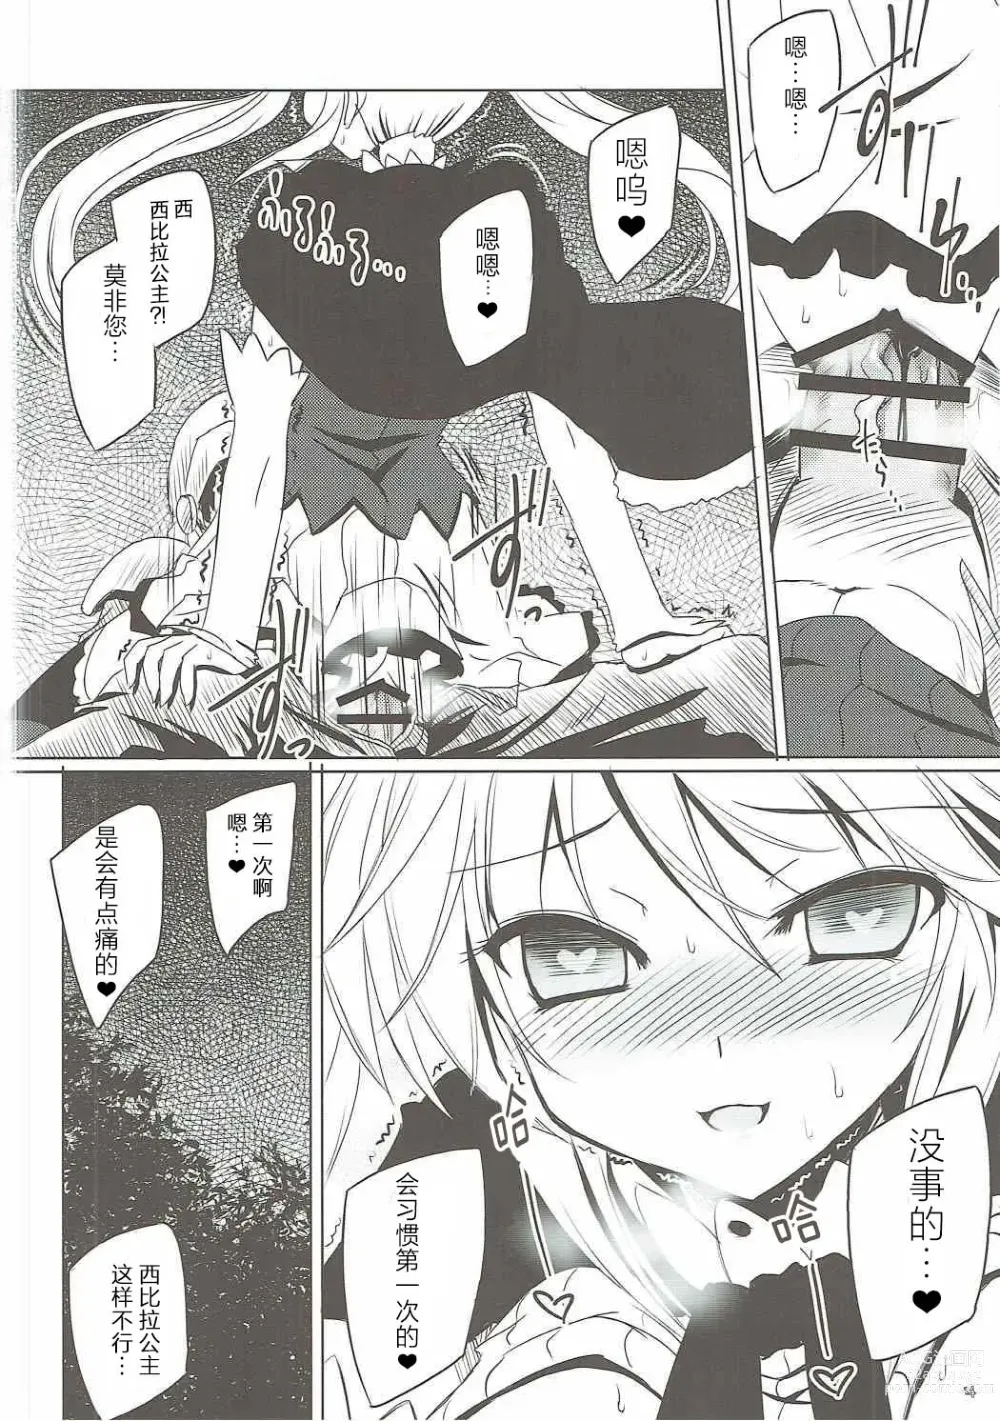 Page 13 of doujinshi 于暗夜徘徊的王国公主